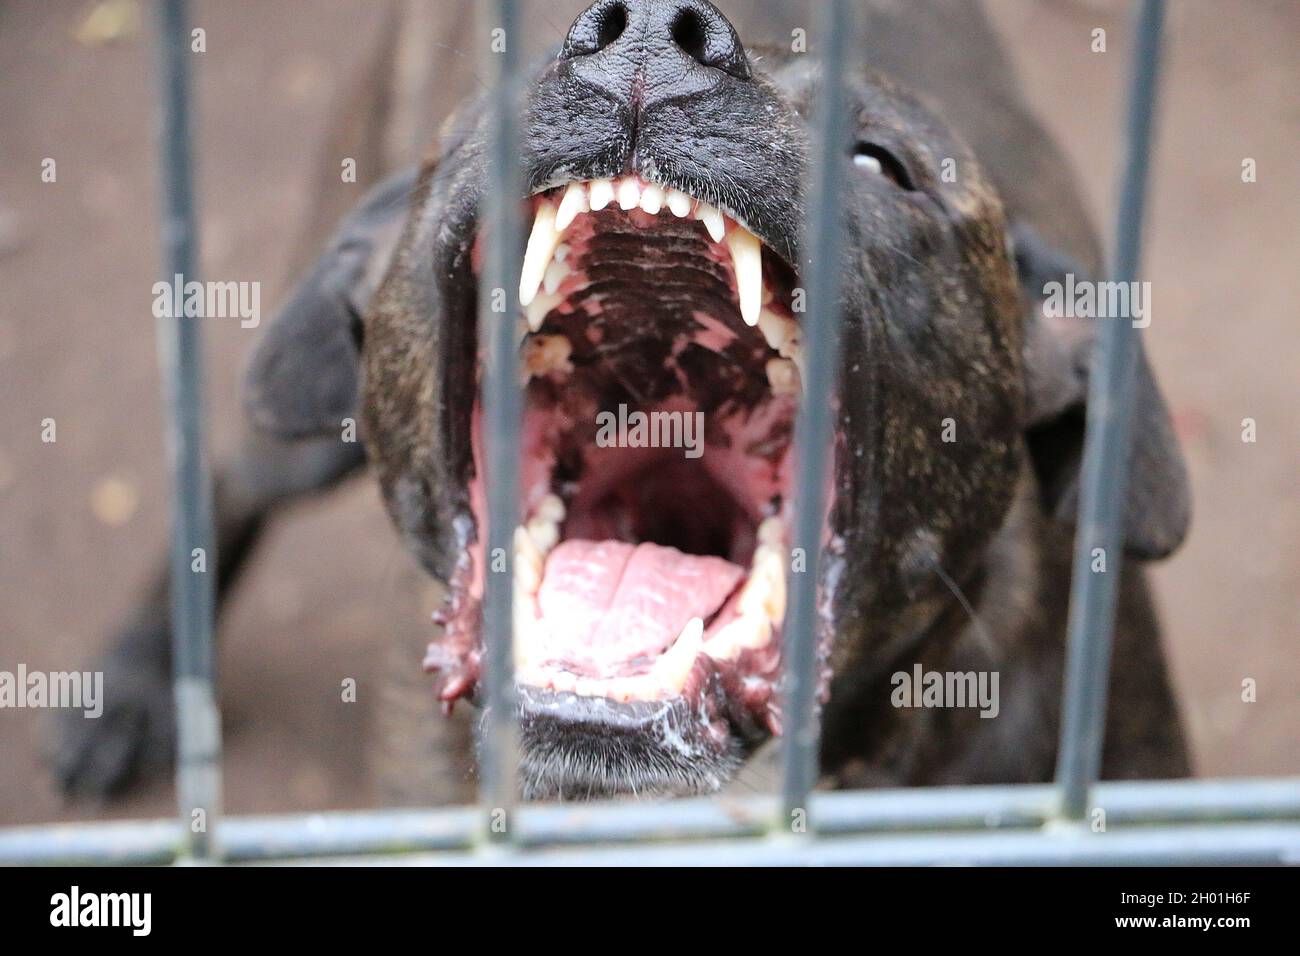 Ein aggressiver Pitbull-Hund hinter dem Zaun; tollwütige Hunde  Stockfotografie - Alamy